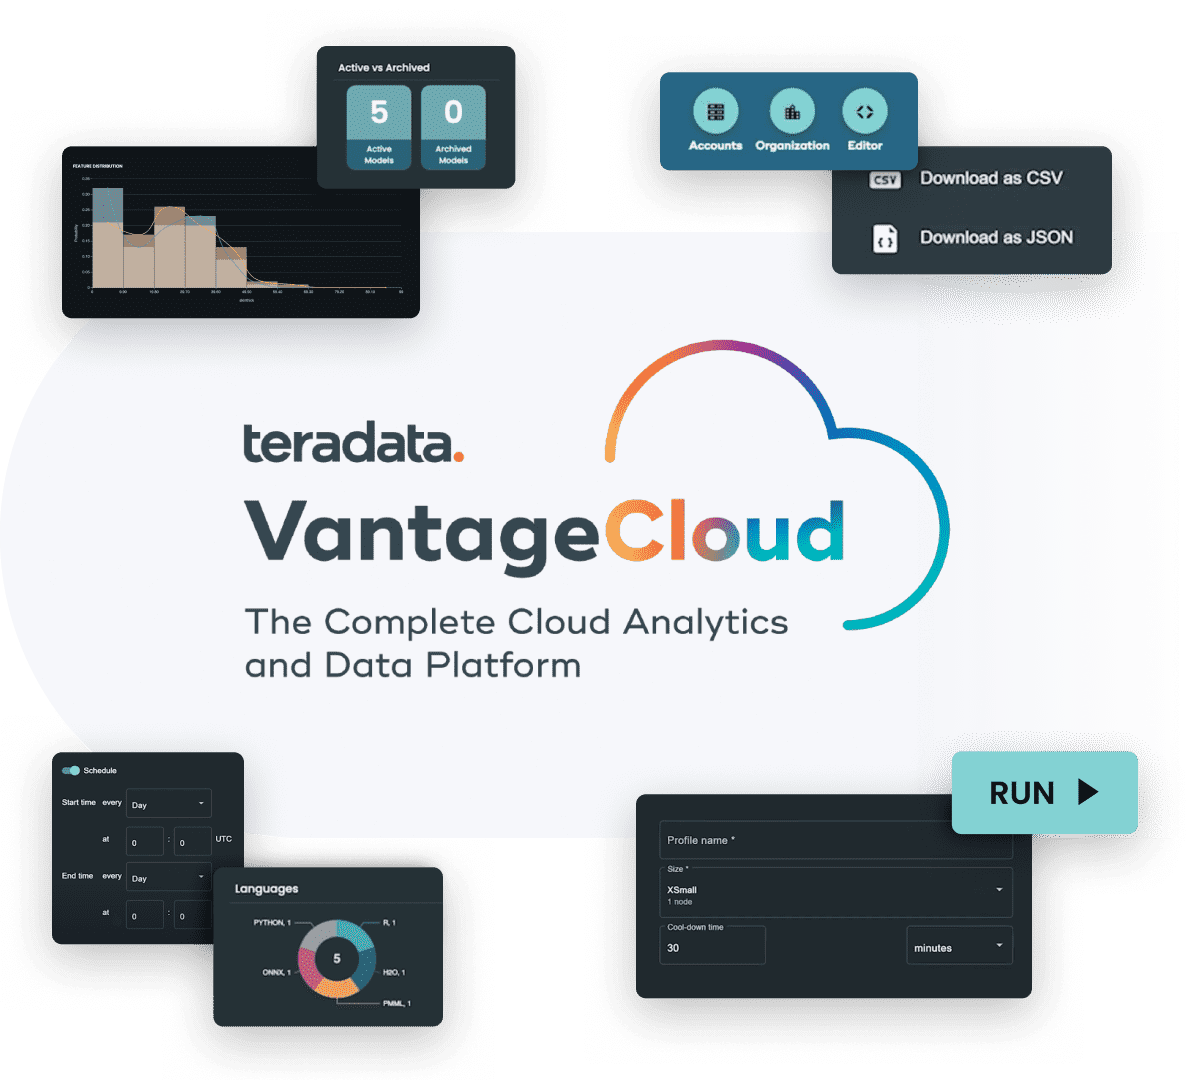 Teradata VantageCloud: The Complete Cloud Analytics and Data Platform